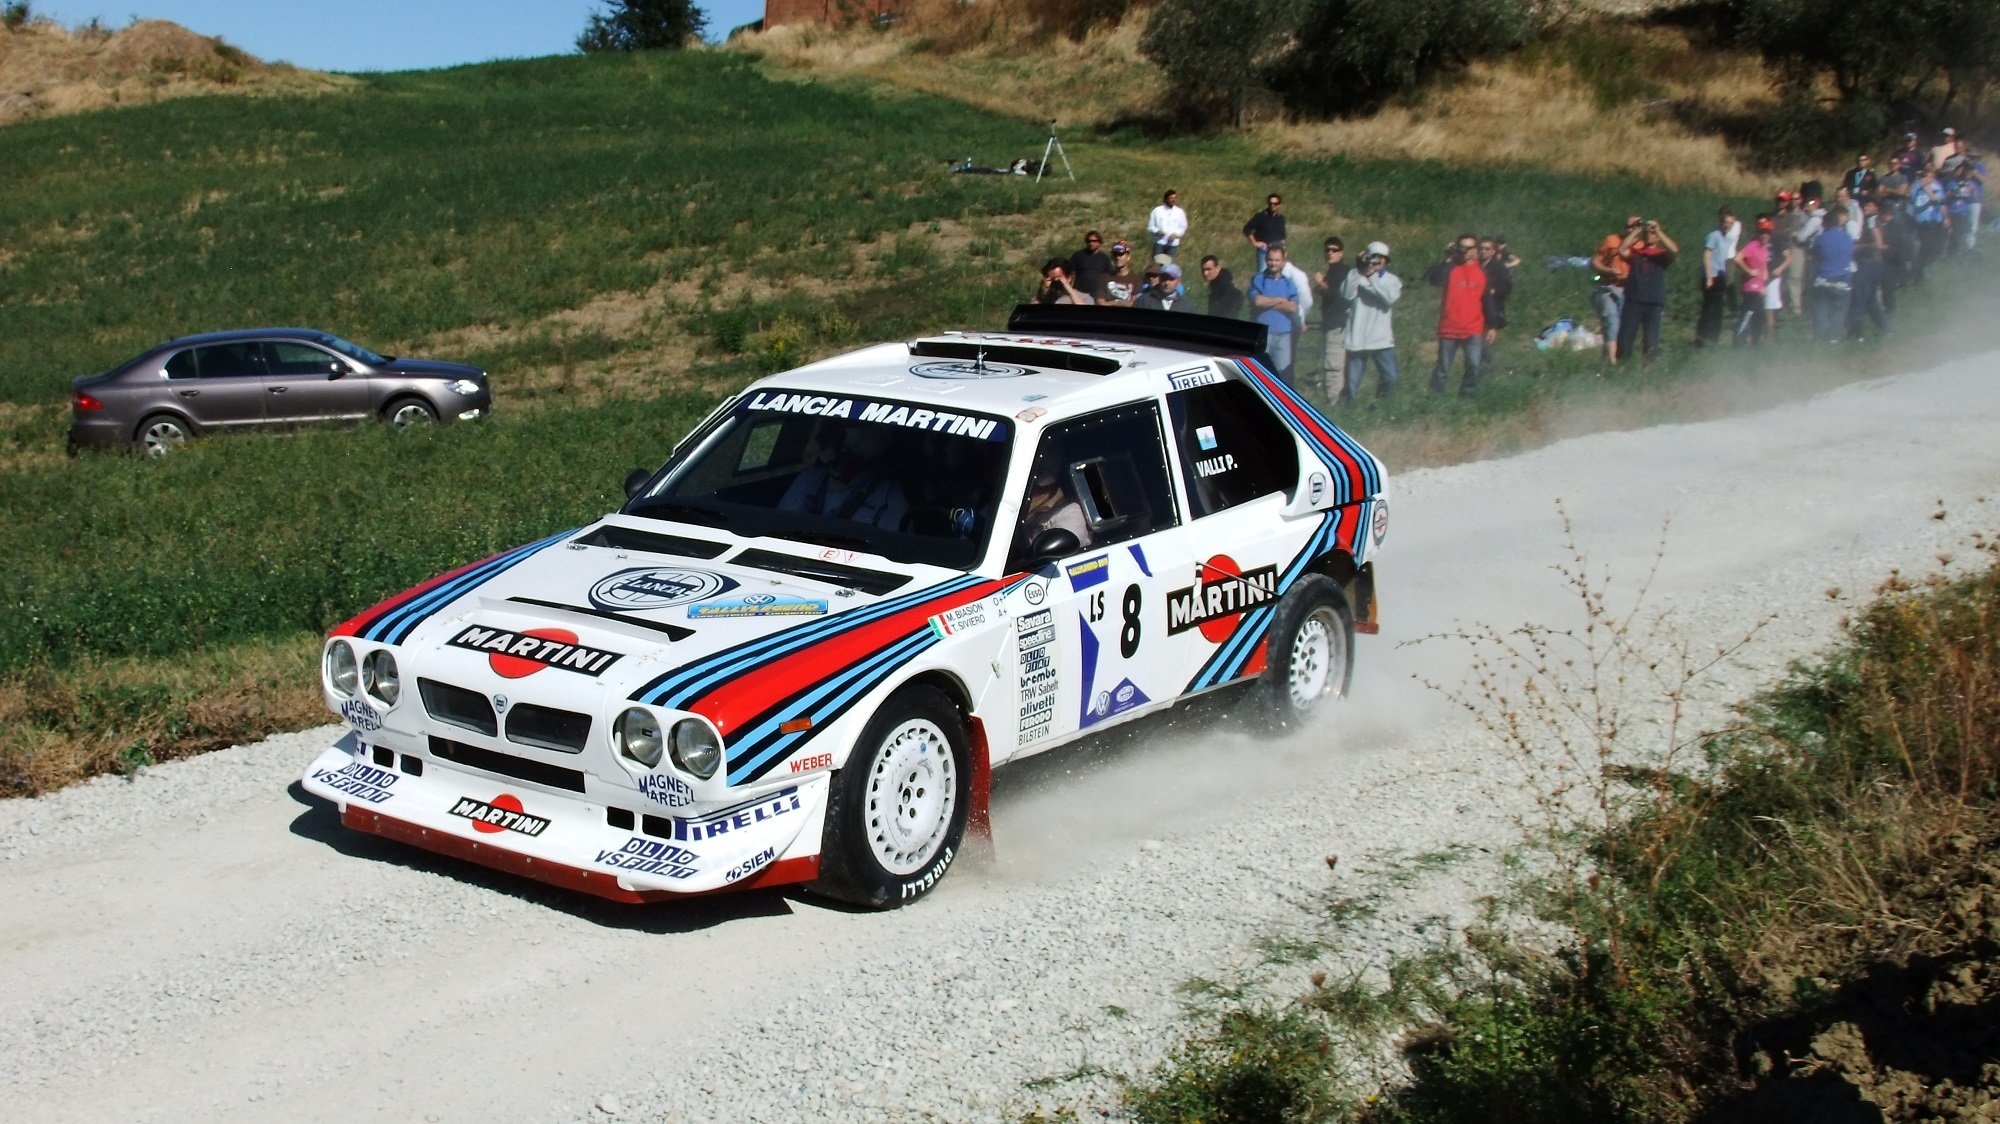 Lancia Delta Rally, Group B cars, Sports wallpapers, Desktop backgrounds, 2000x1130 HD Desktop